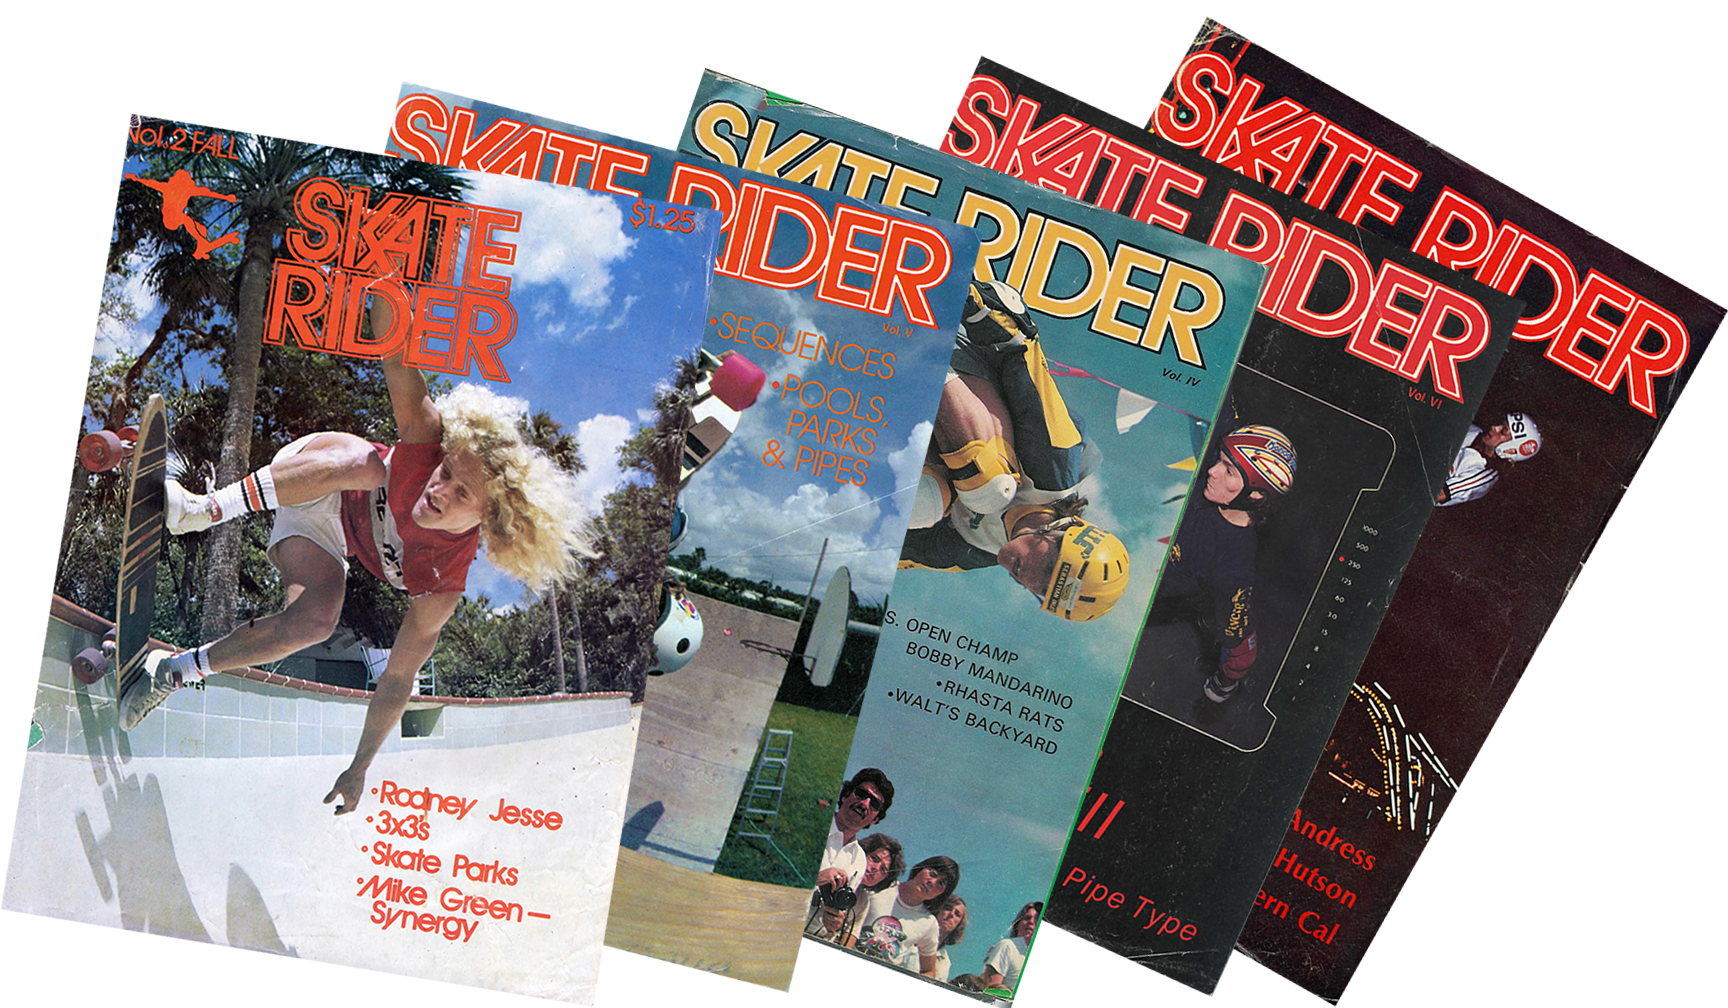 Skate Rider Magazine Library